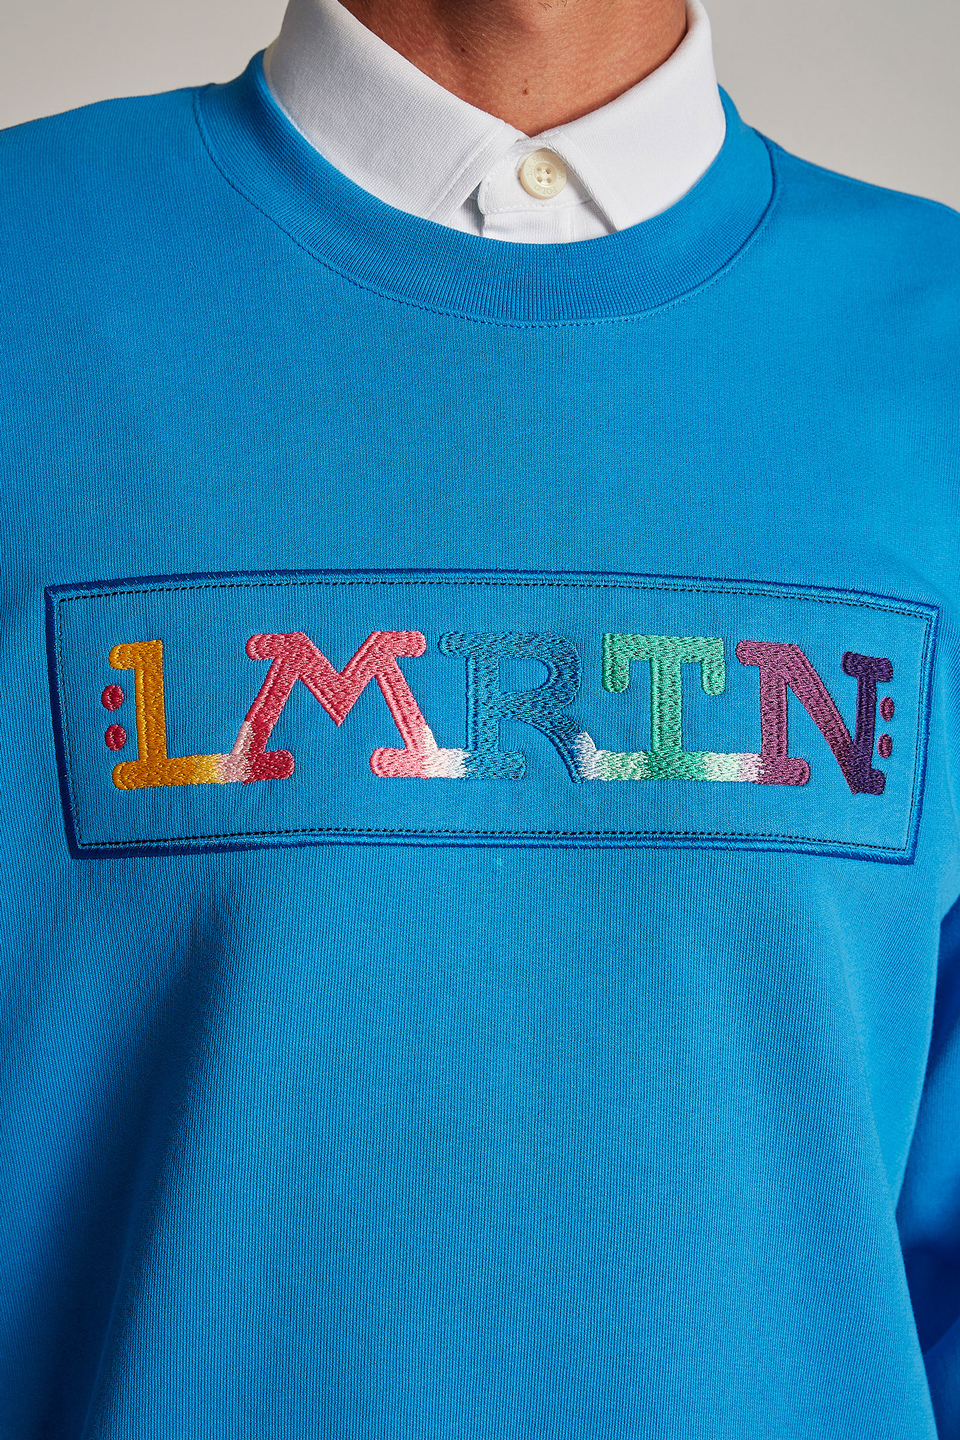 Men's oversized round-neck sweatshirt in 100% cotton fabric | La Martina - Official Online Shop